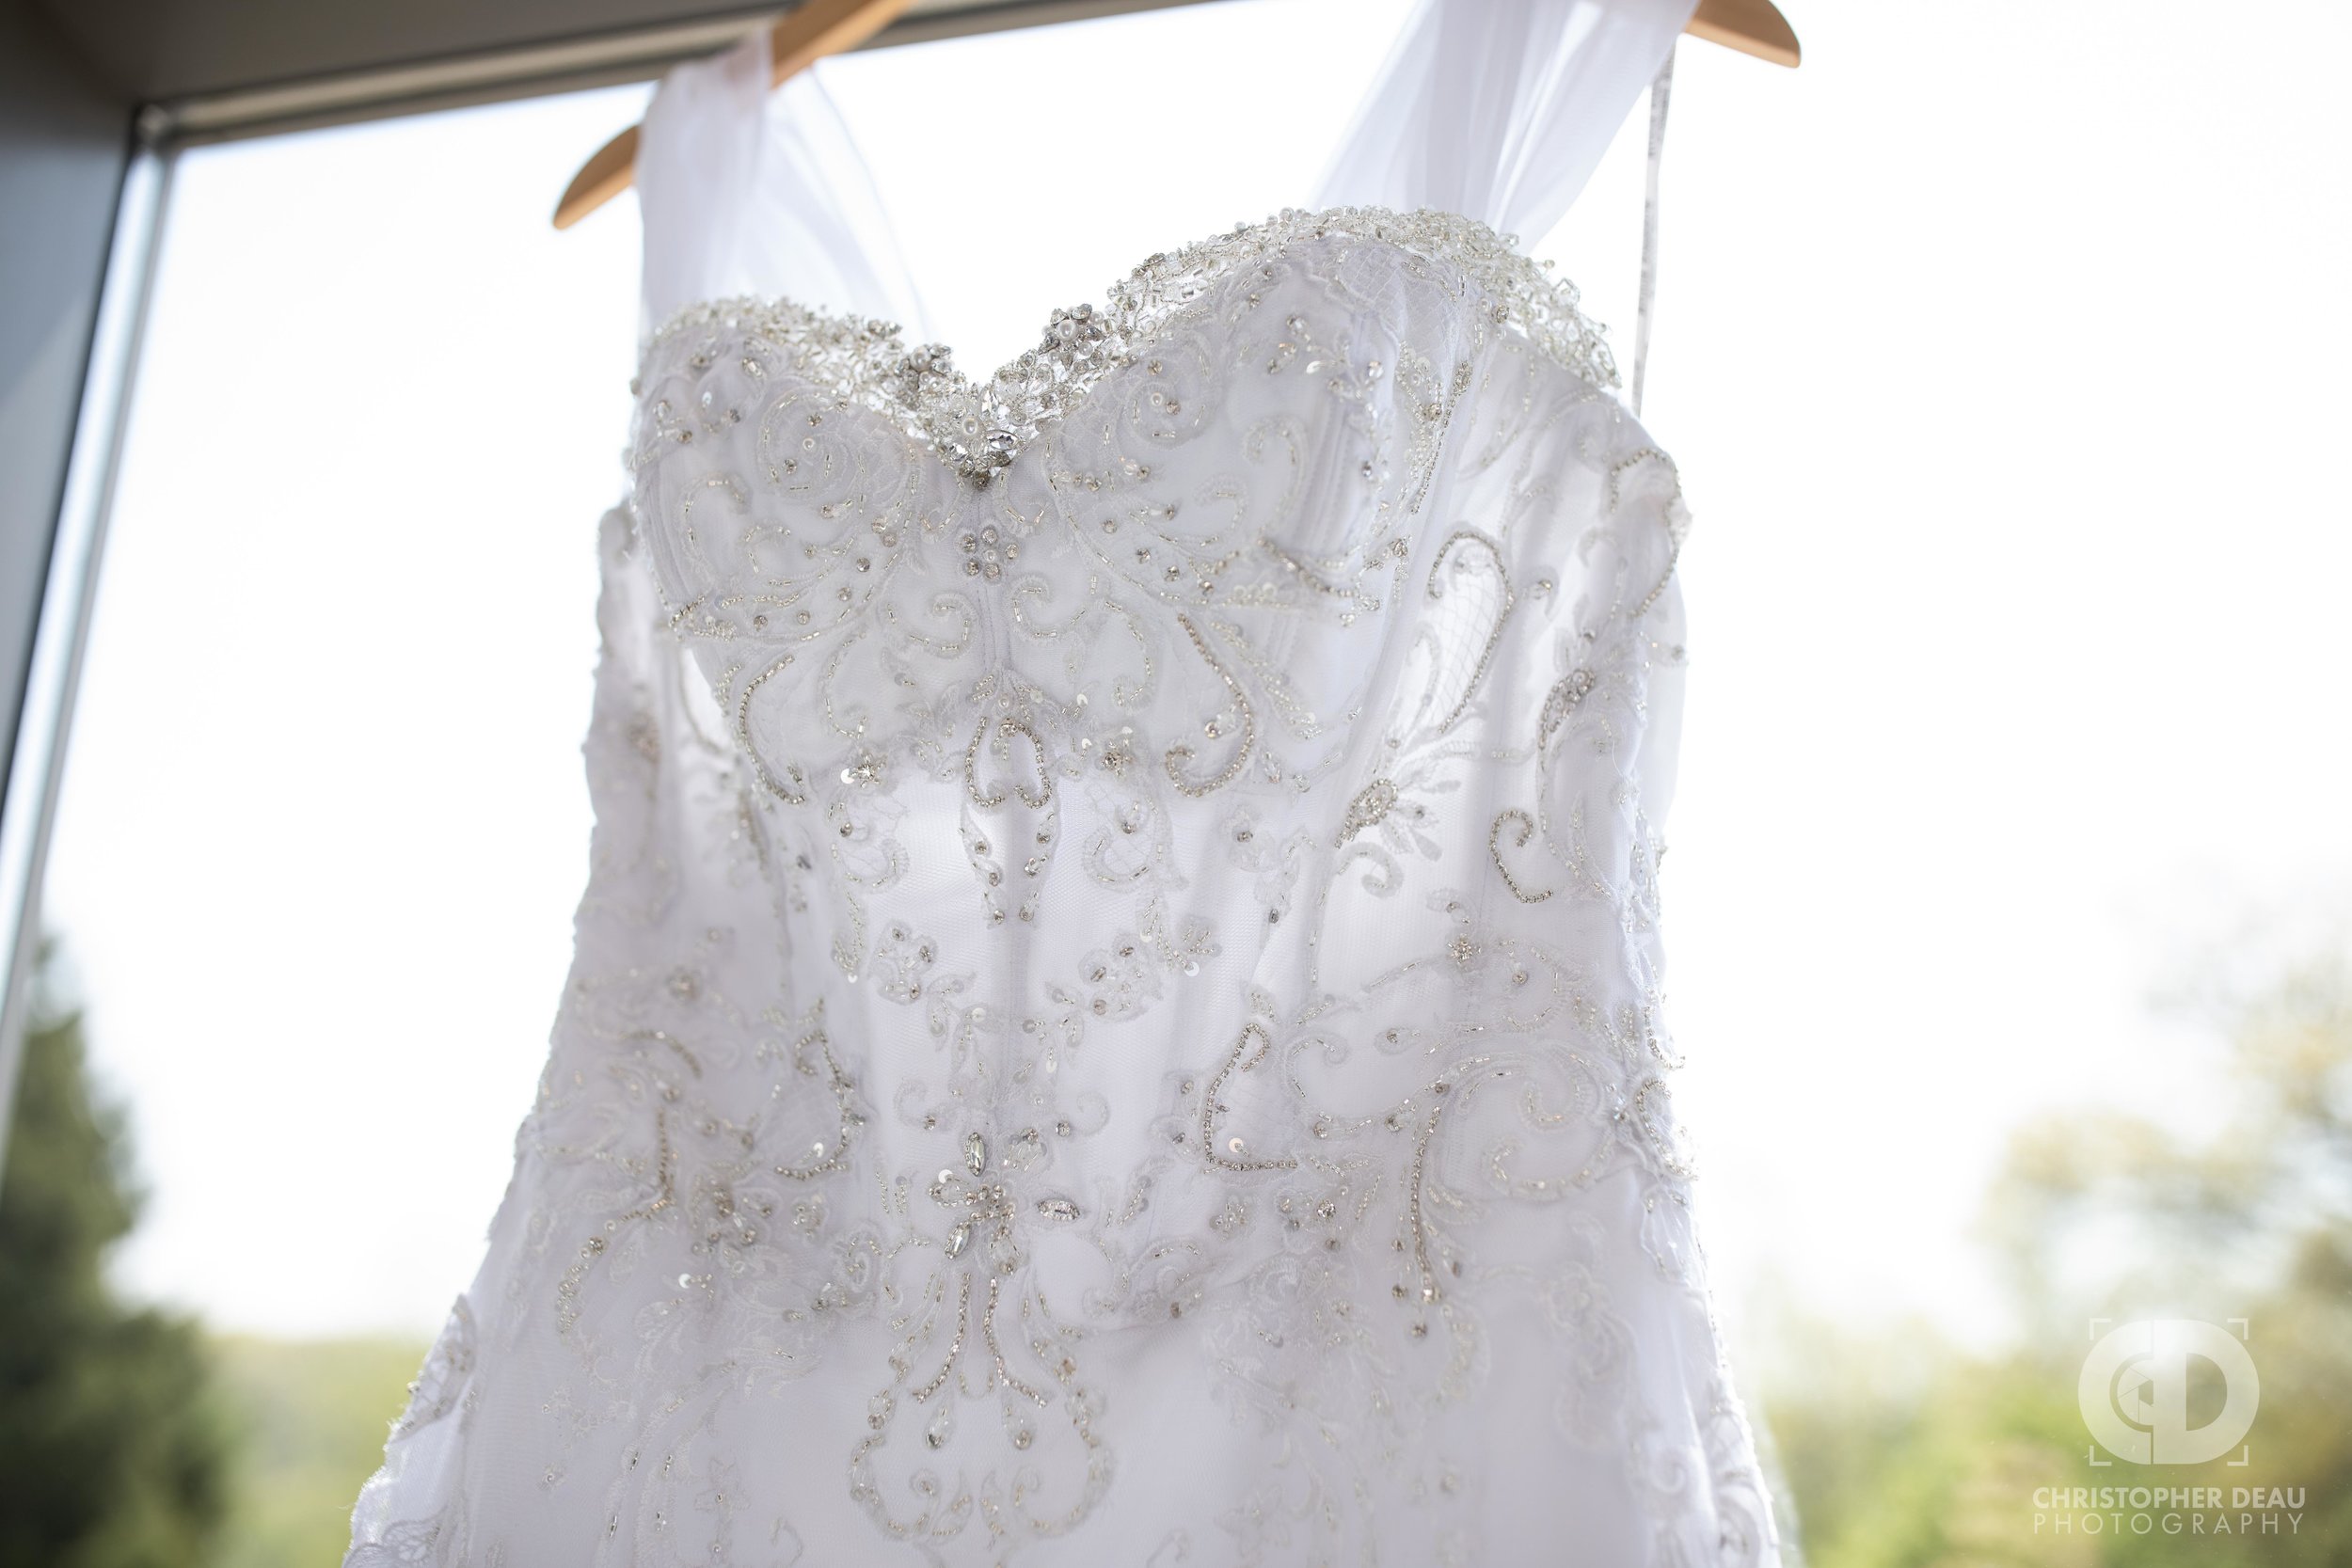  white wedding dress detail 